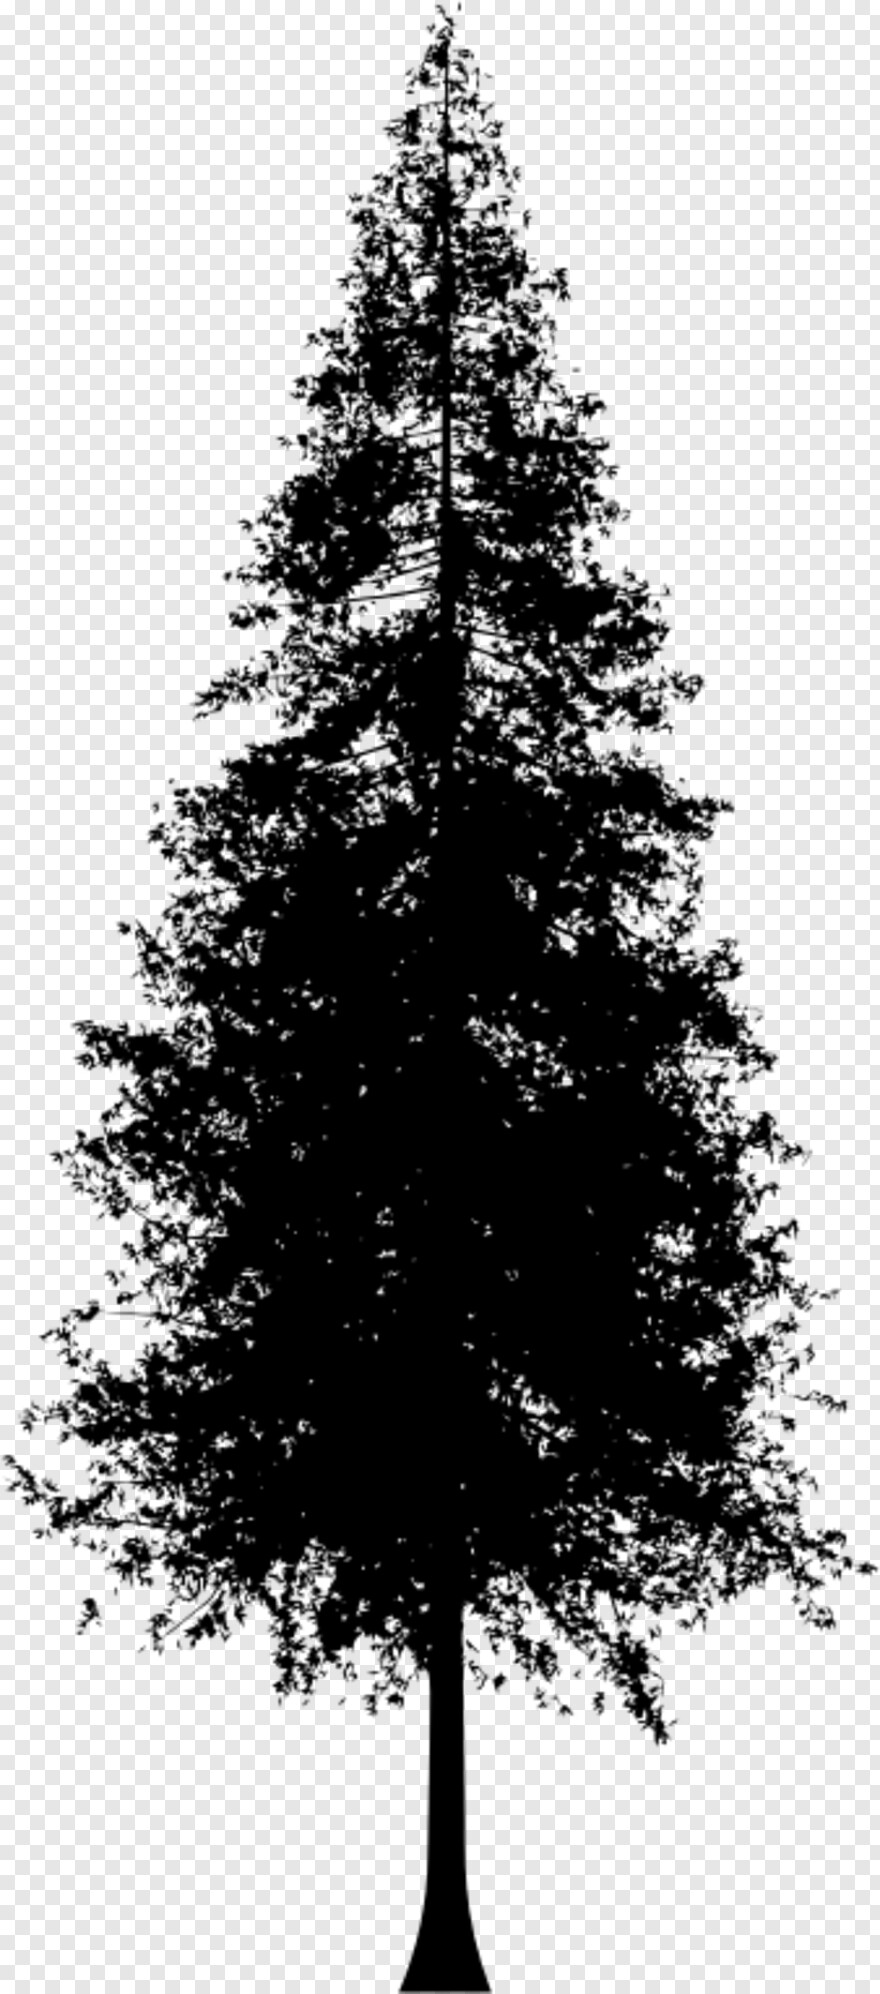 redwood-tree # 461257